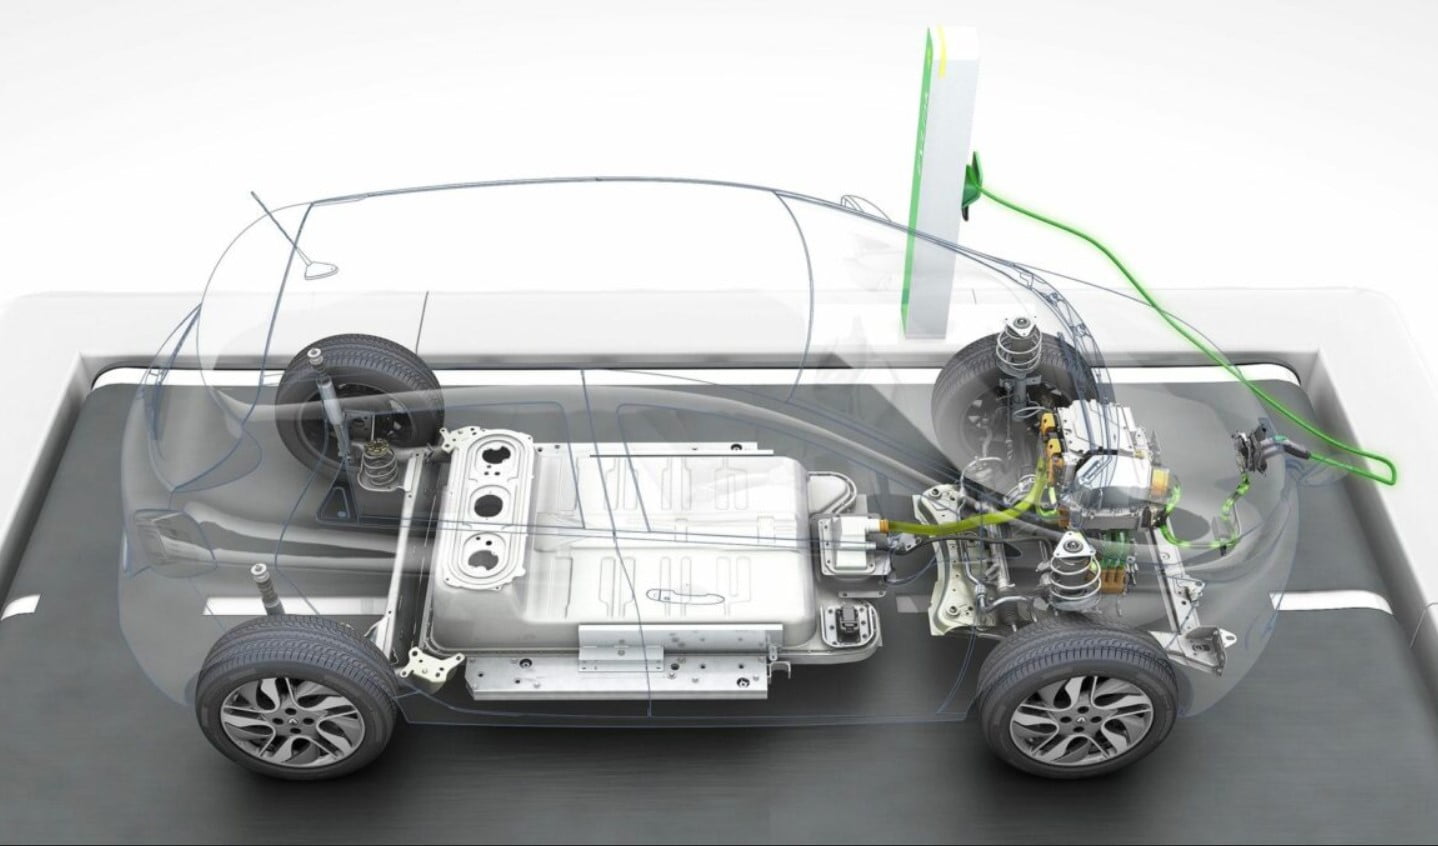 La firma de baterías ONE revela tecnología celular para carros eléctricos de 600 millas